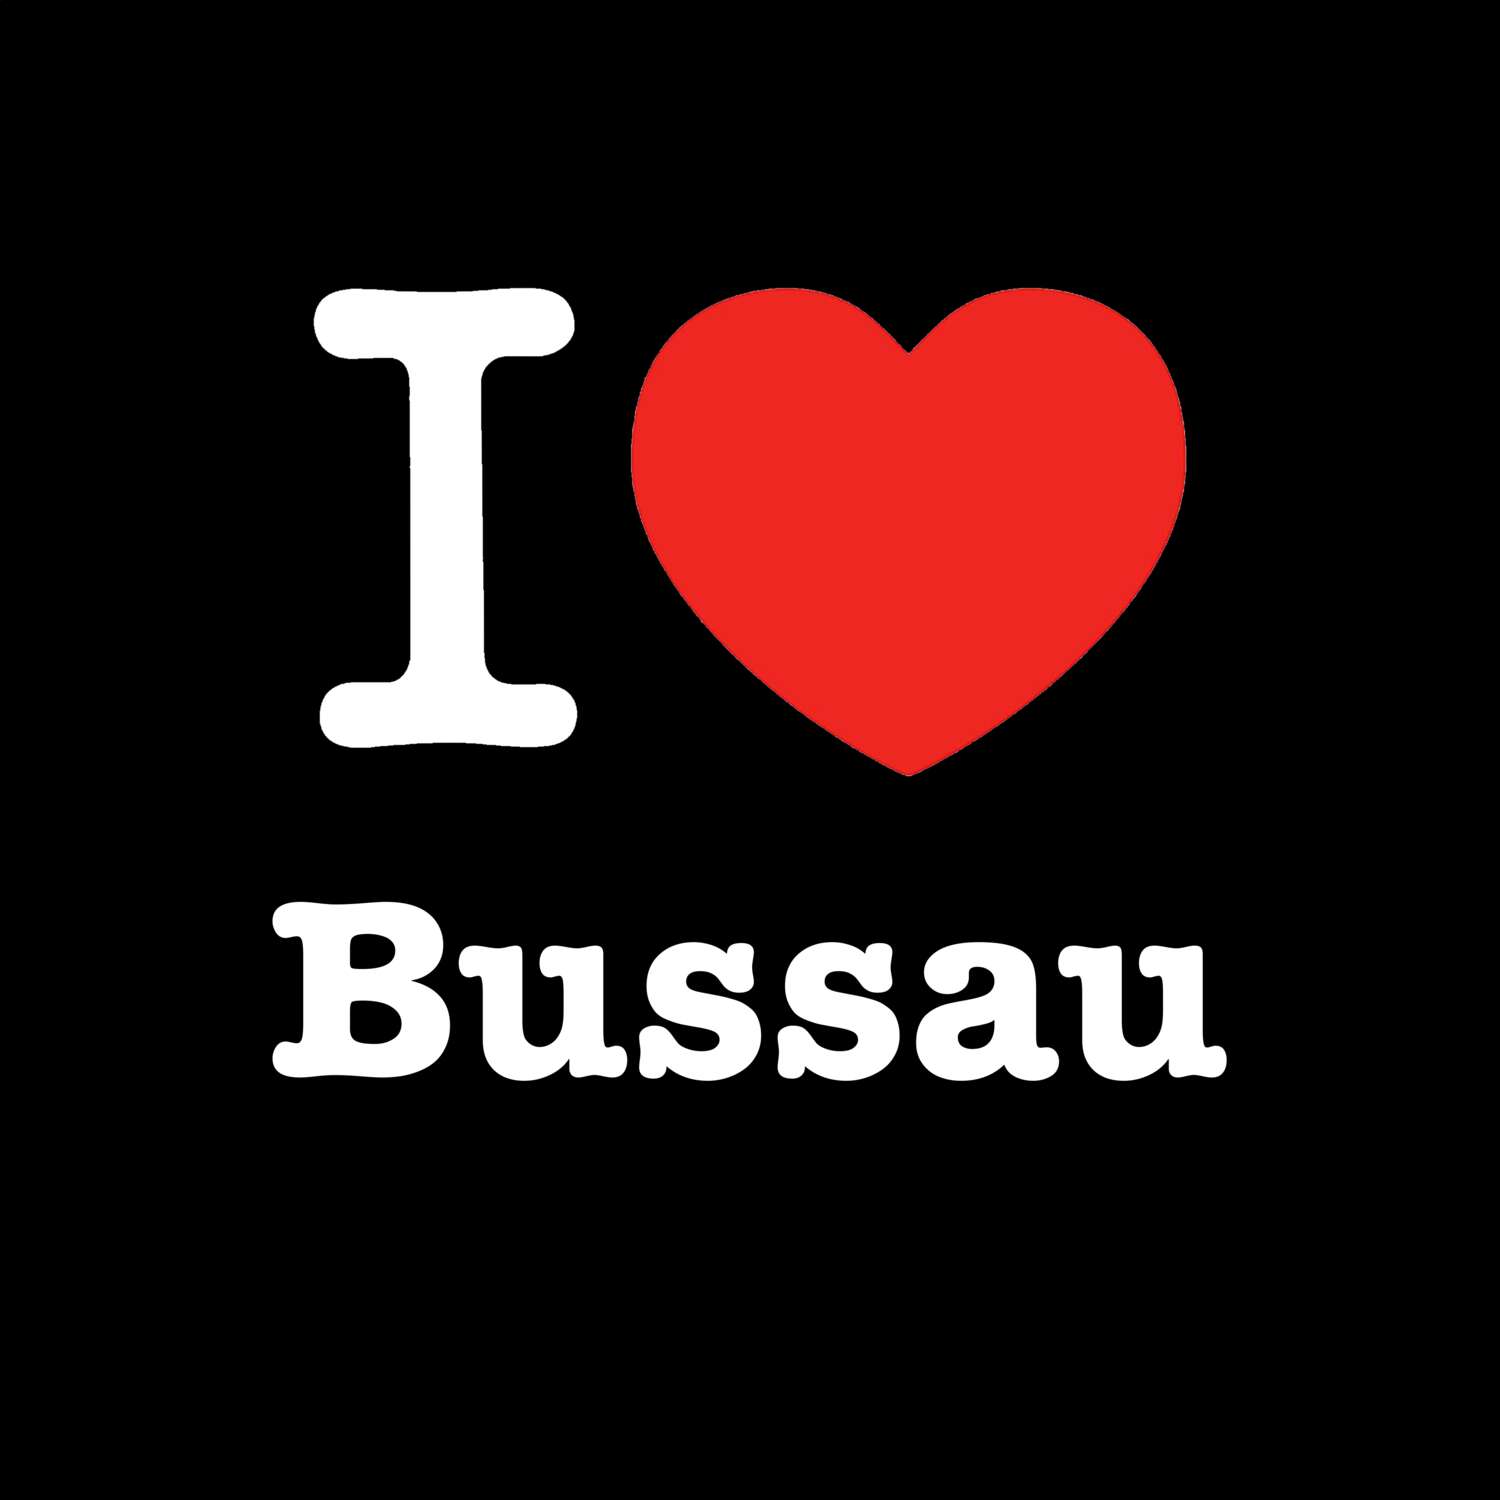 Bussau T-Shirt »I love«